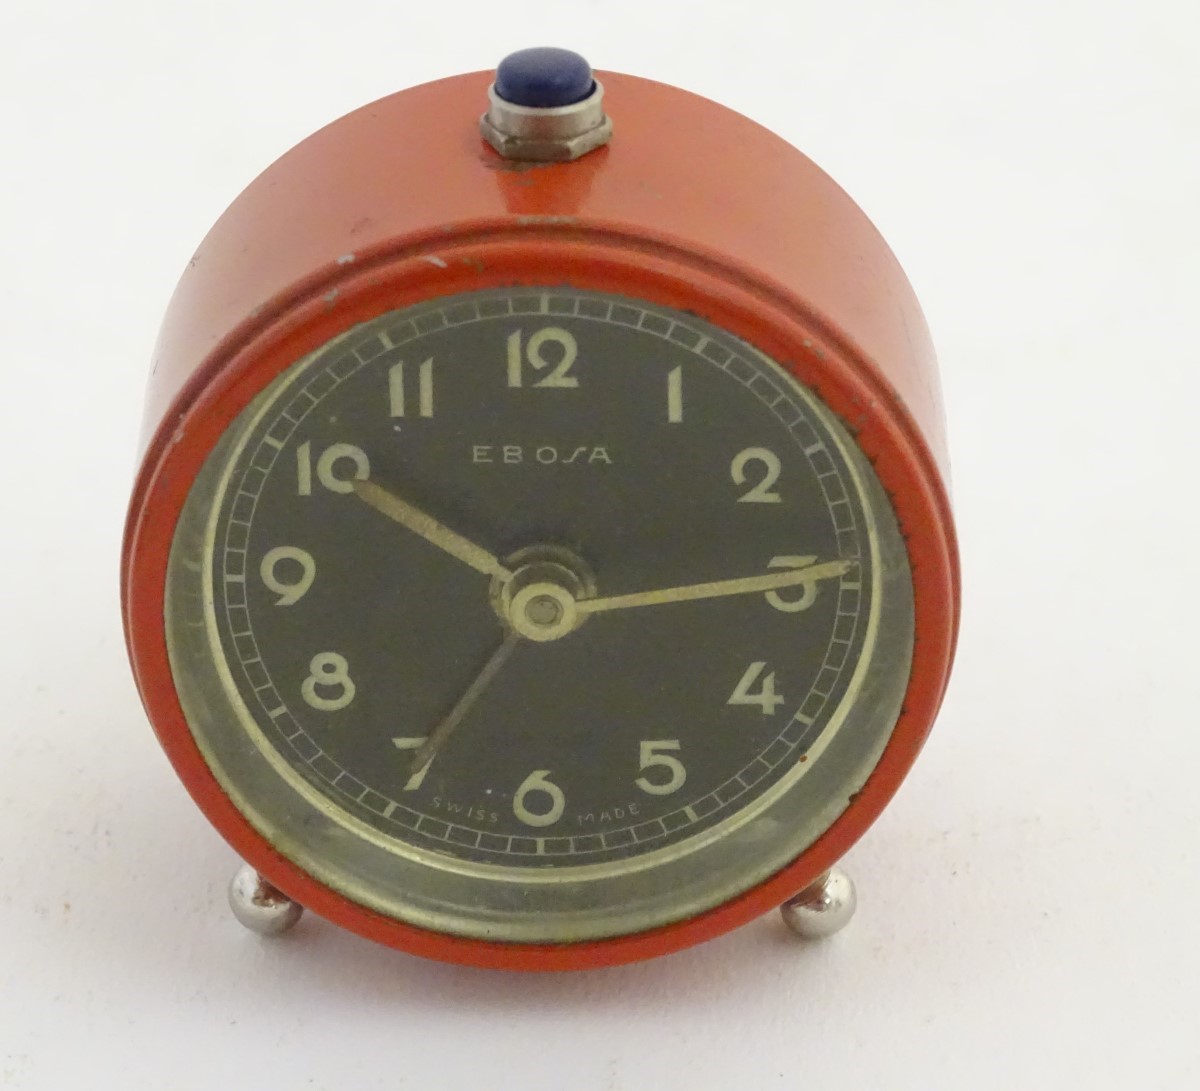 Ebosa : a Swiss small bedside alarm clock with original instructions and box 2 1/4” high. - Bild 4 aus 5